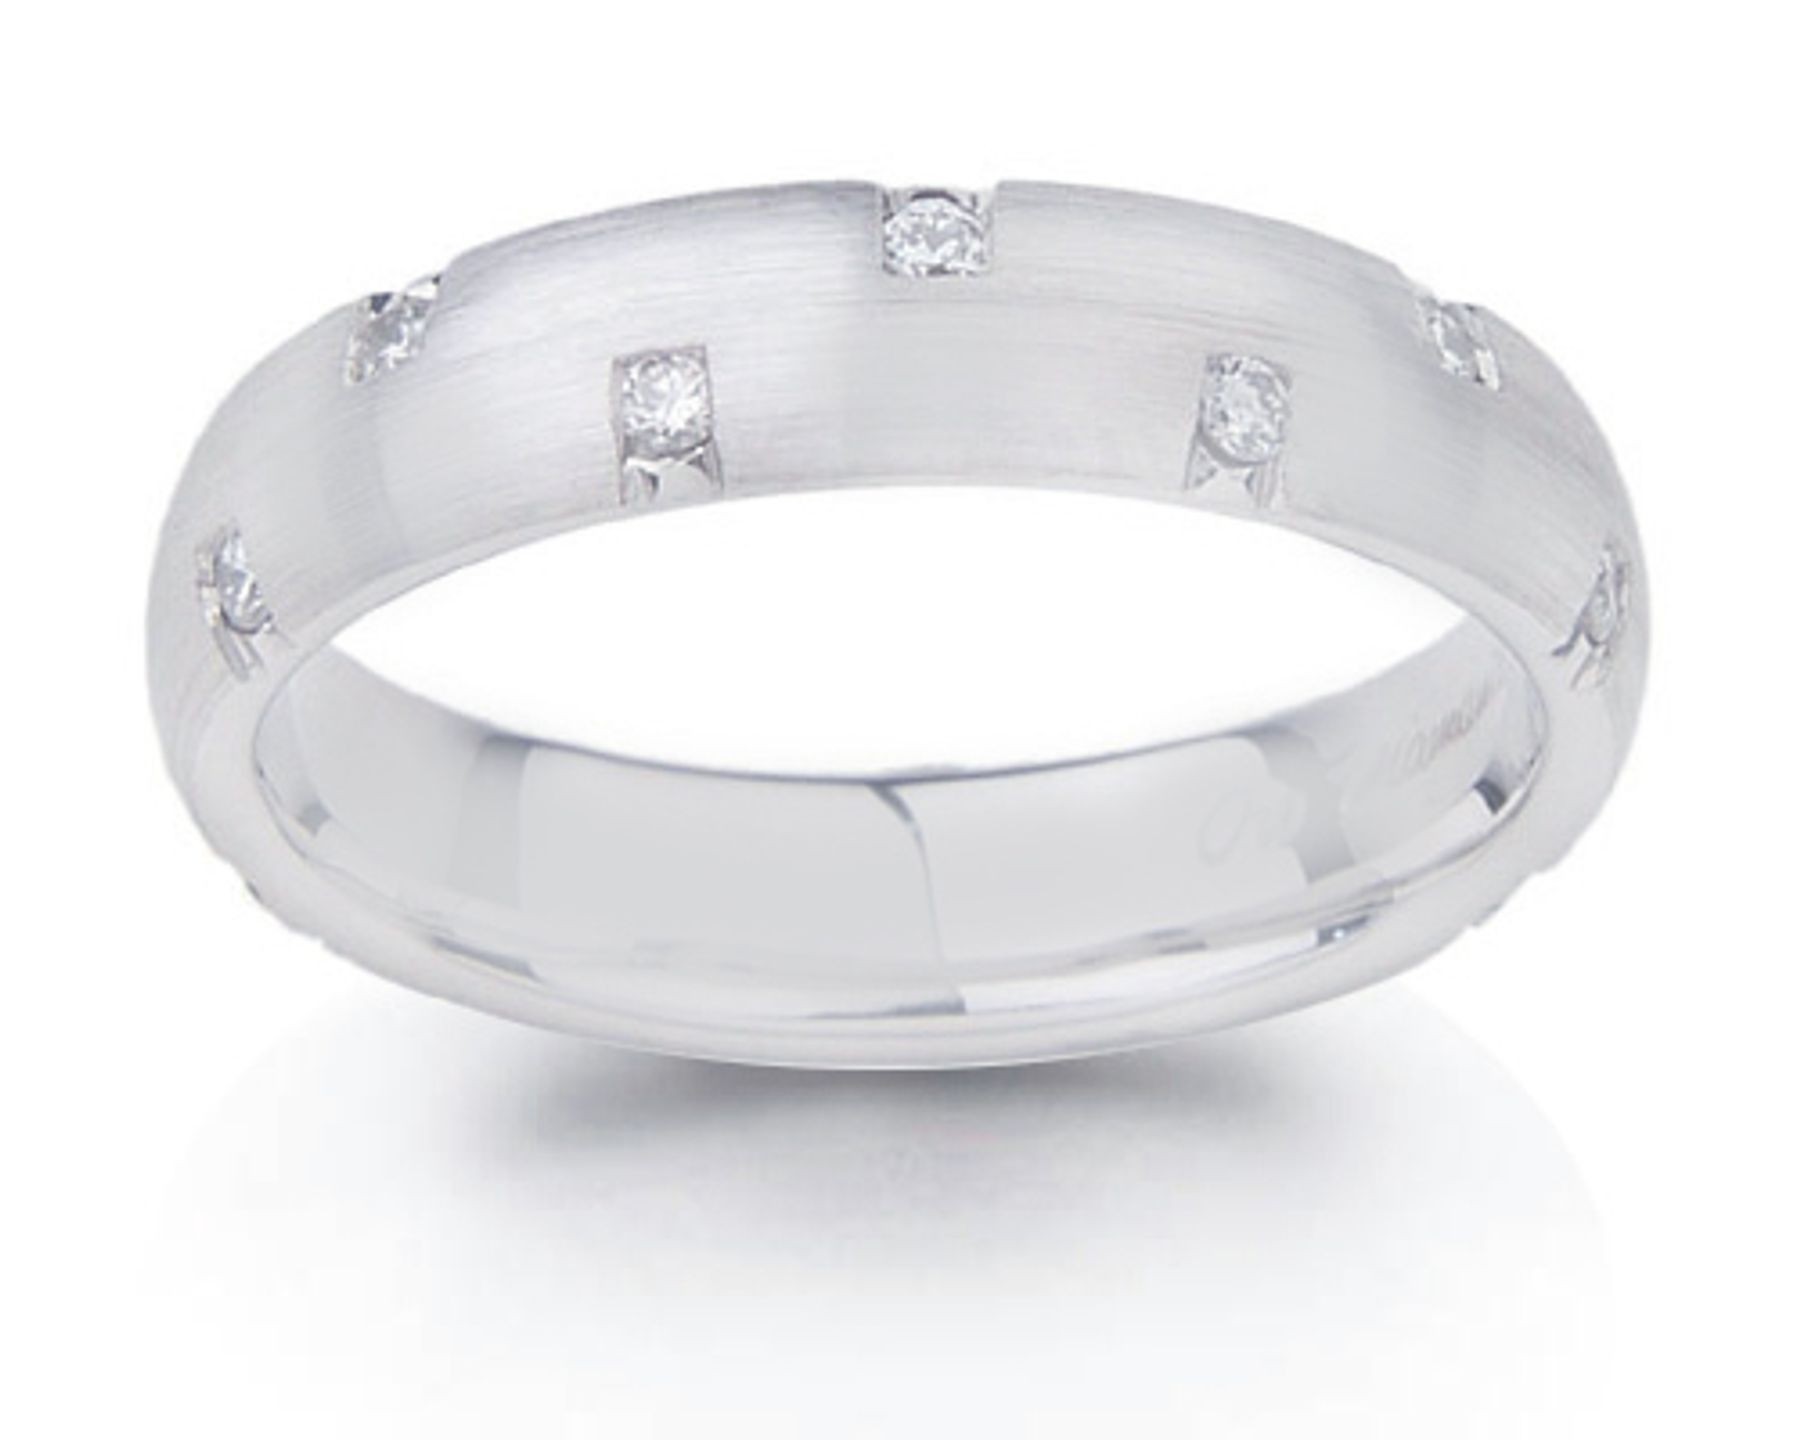  Platinum Flat Comfort Diamond Ring with Round Diamonds